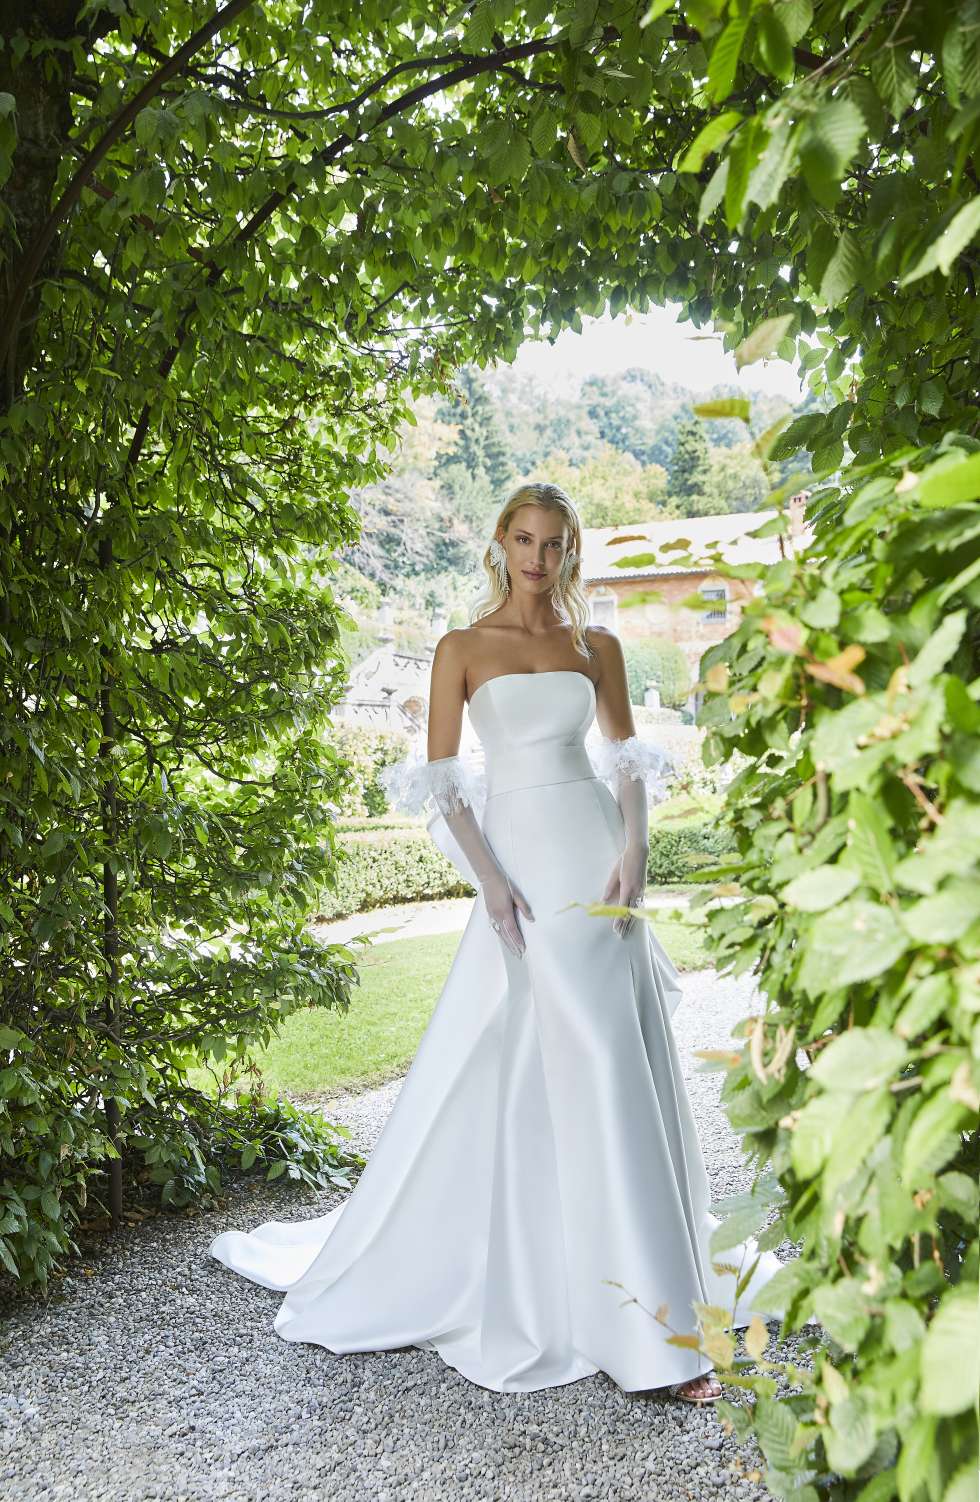 The 2021 Wedding Dresses by Elisabetta Polignano - Libellula